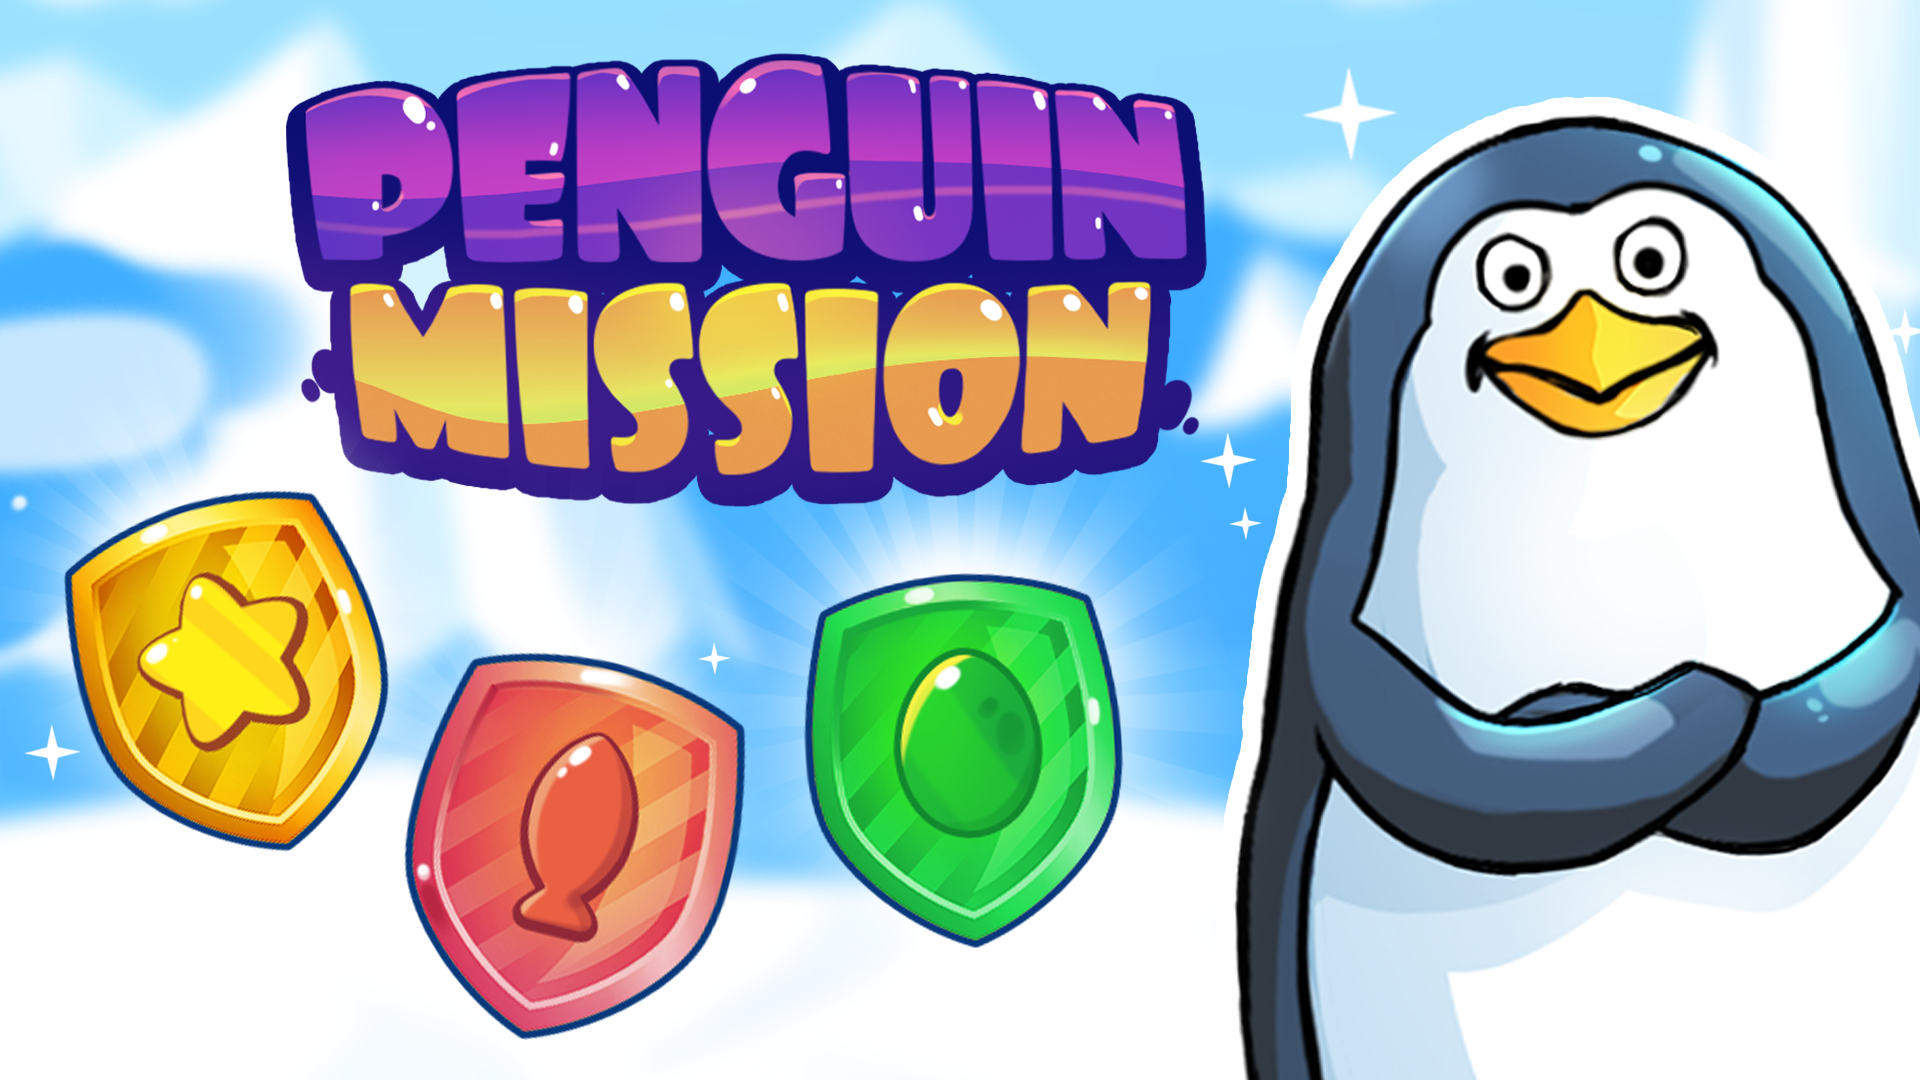 Screenshot 1 of Миссия пингвинов 1.0